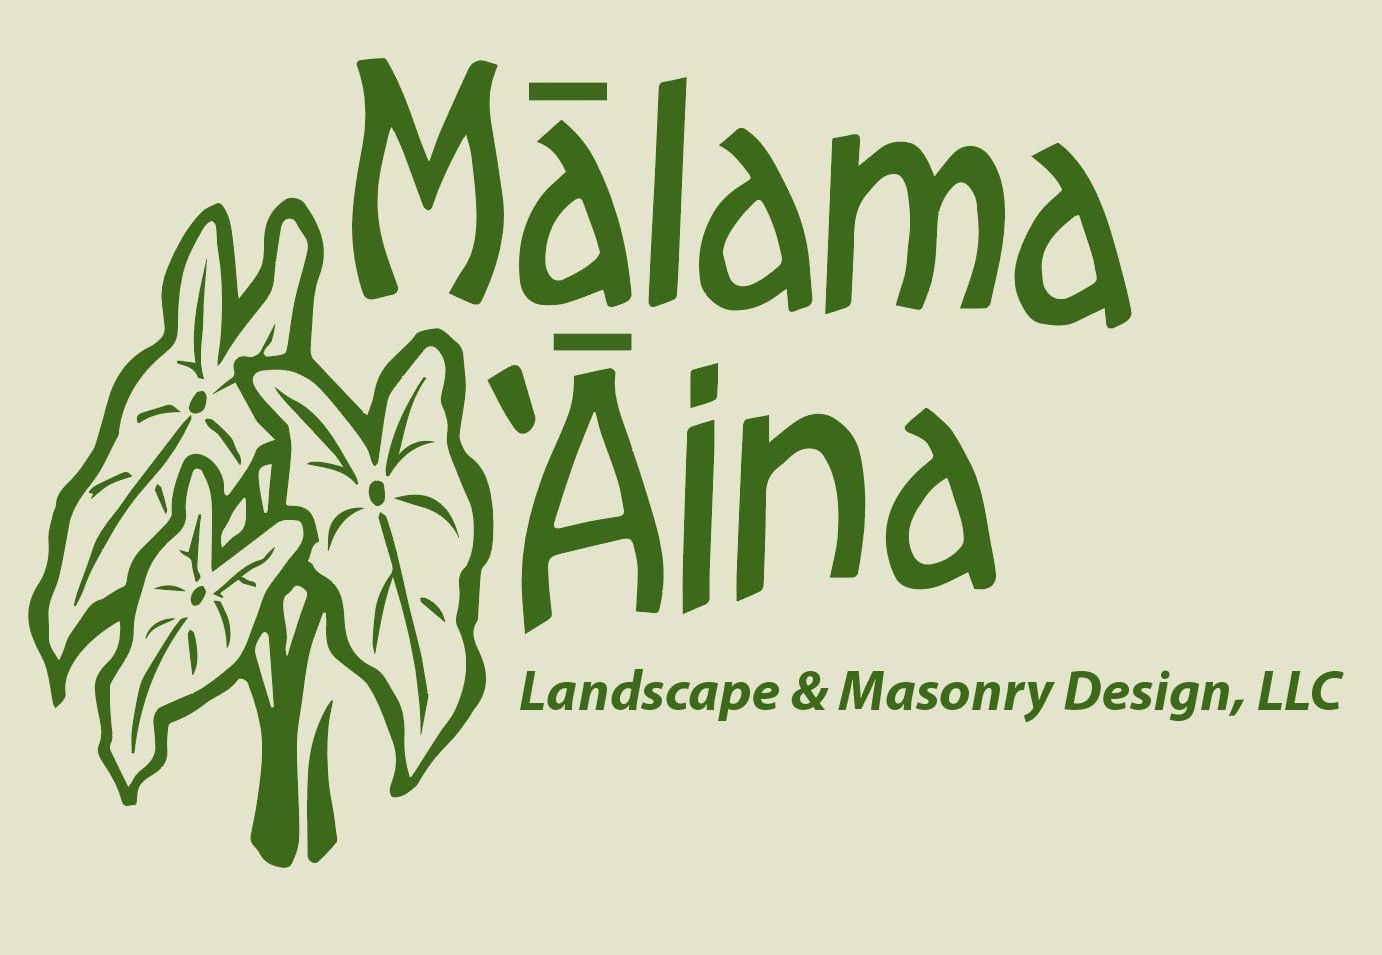 Malama Aina Landscape and Masonry Design